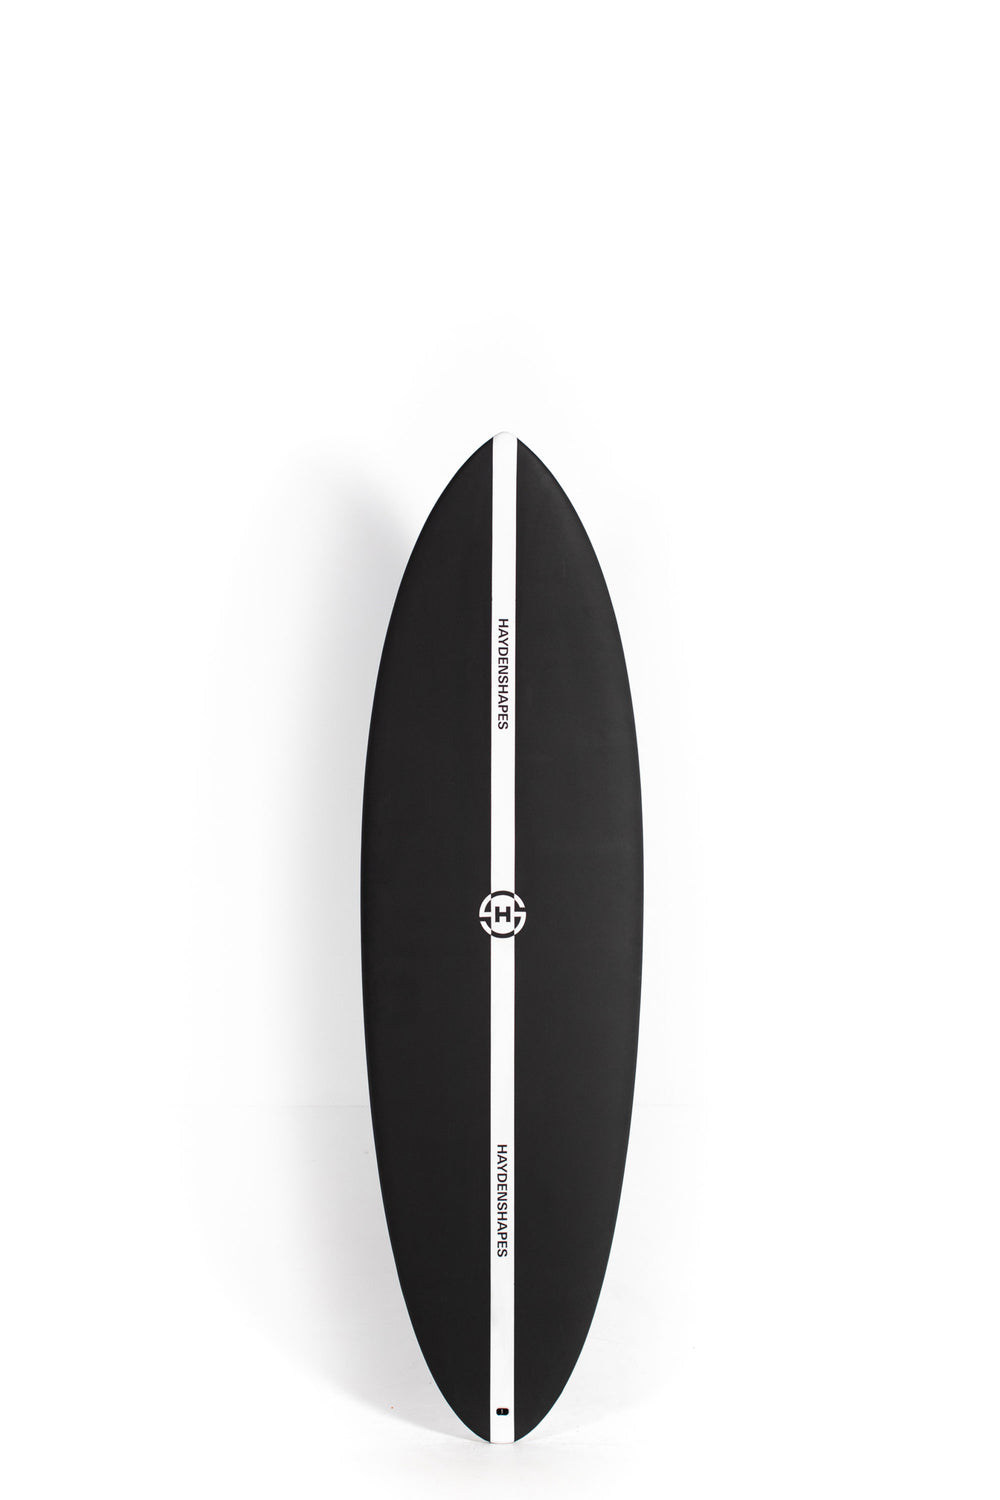 HaydenShapes Surfboard - HYPTO KRYPTO SOFT - 6'4